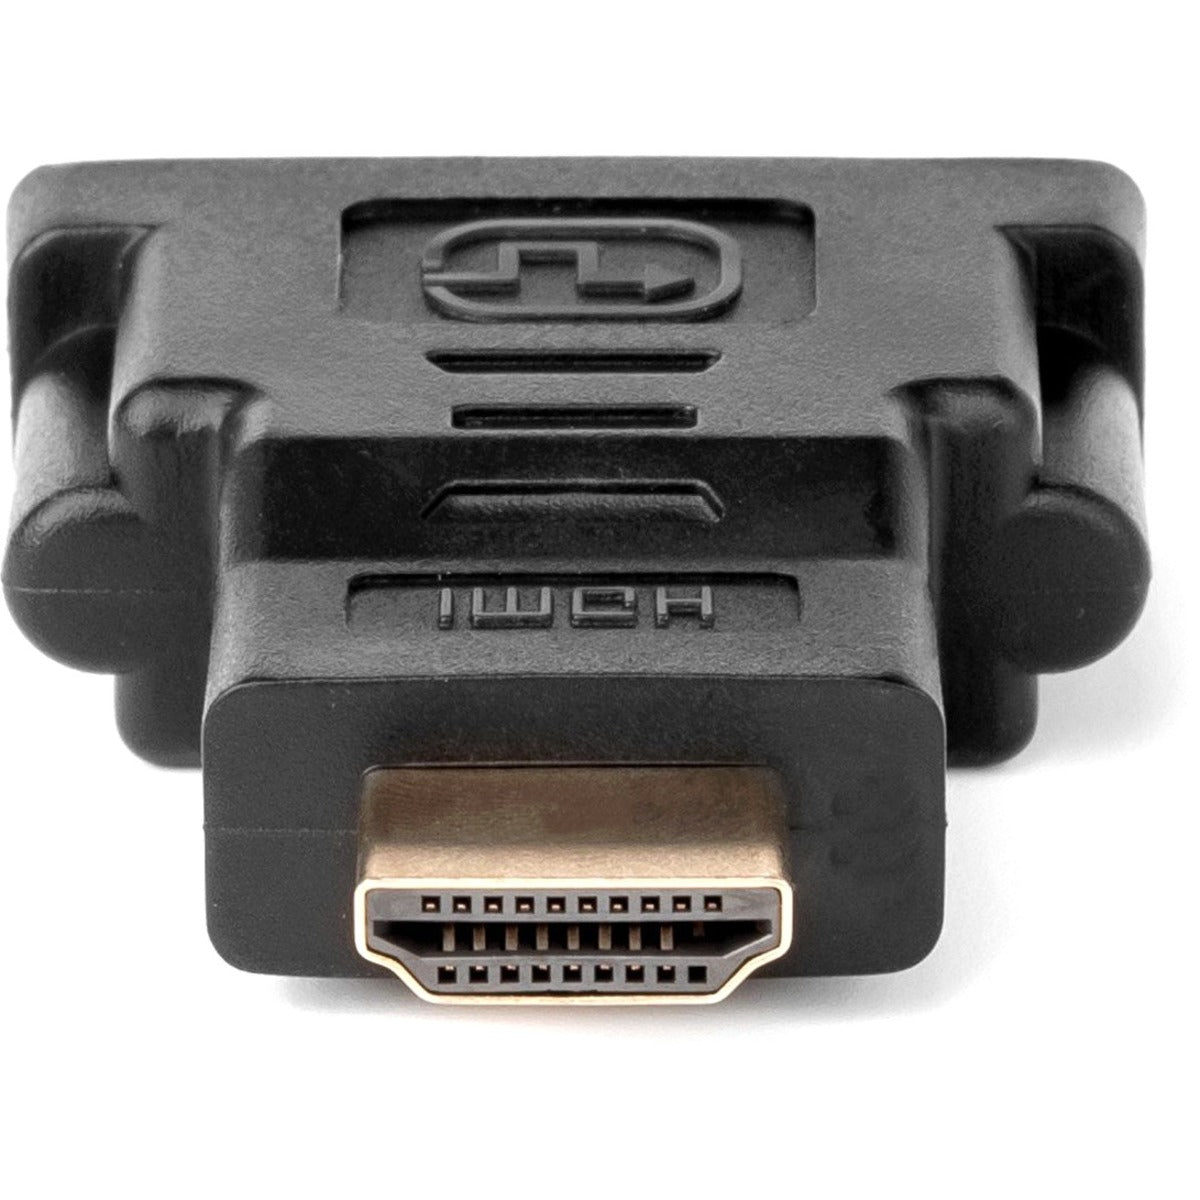 Rocstor Y10A238-B1 HDMI zu DVI-D Videokabeladapter - M/F vergoldet passiv